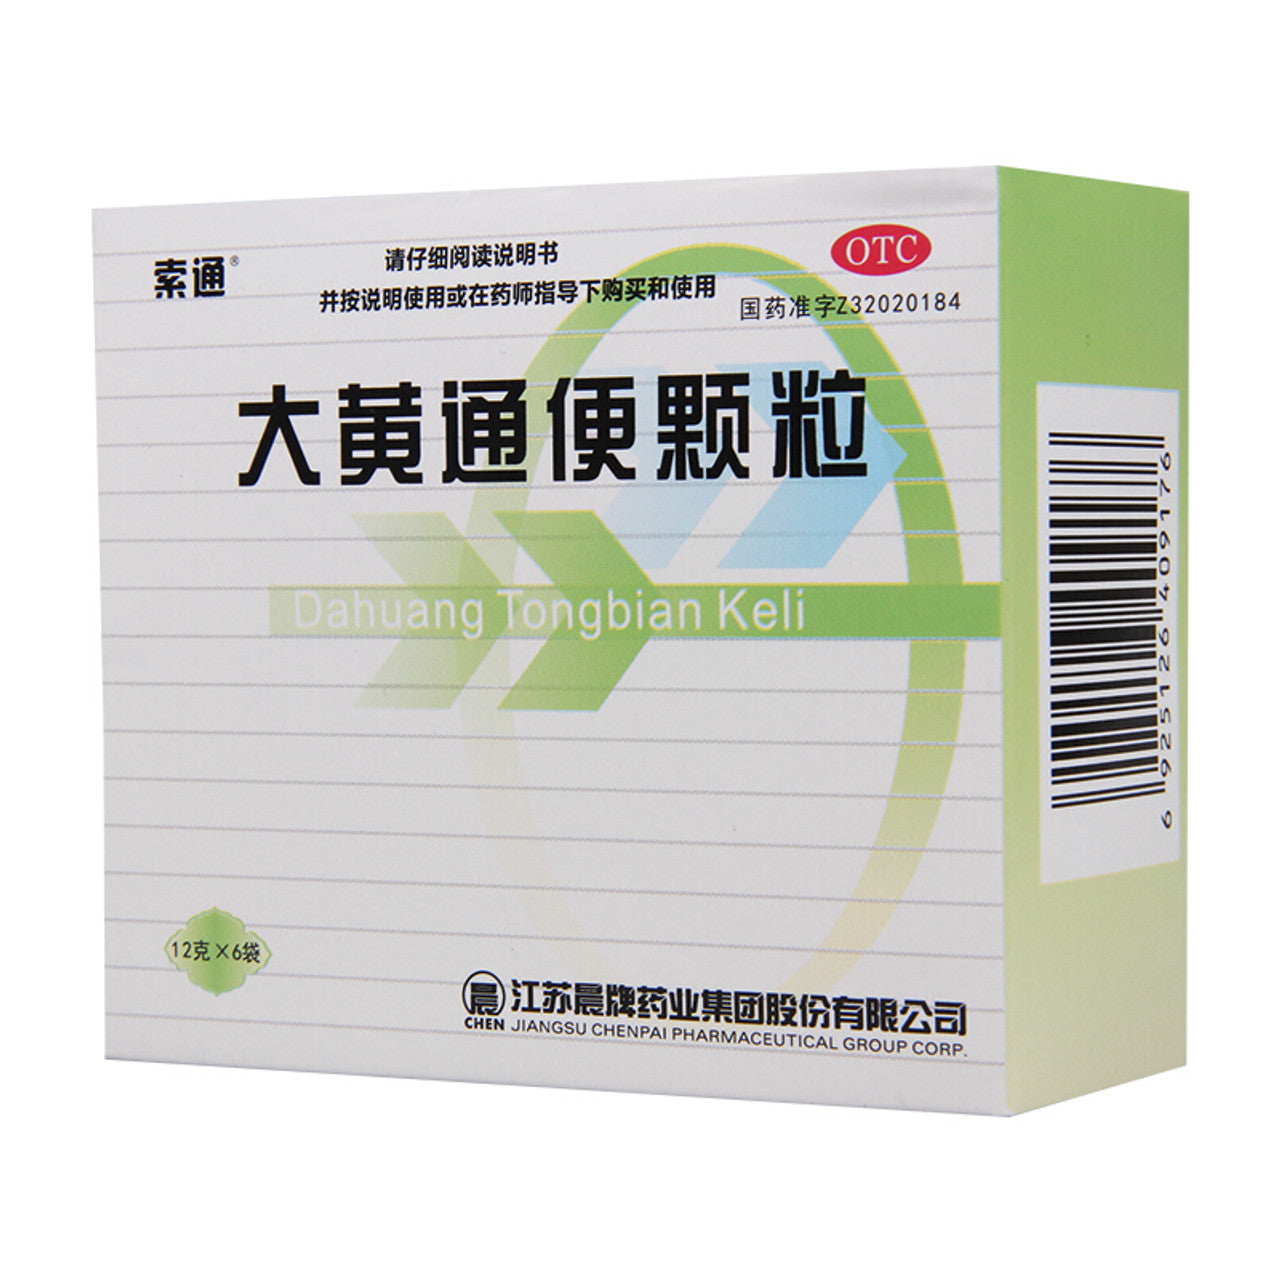 Traditional Chinese Medicine. Daihuang Tongbian Keli or Daihuang Tongbian Granules for Constipation. Dai Huang Tong Bian Ke Li. 12g*6 sachets*5 boxes